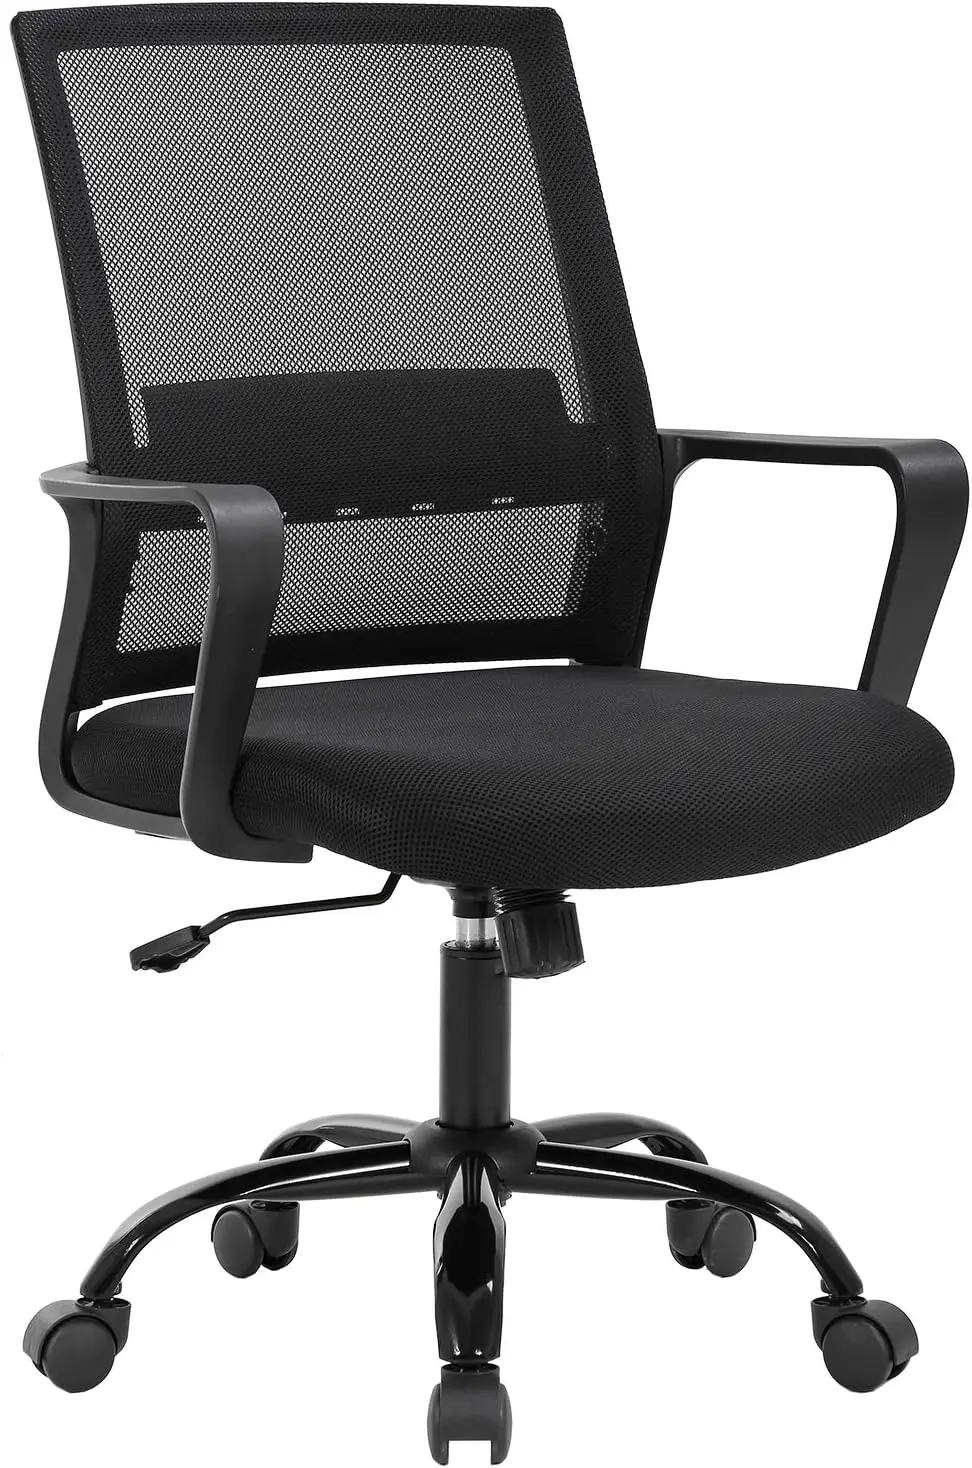 

Adjustable Ergonomic Desk Chair Swivel Rolling Computer Chair Executive Lumbar Support Task Mesh Chair for Women Men (Black)